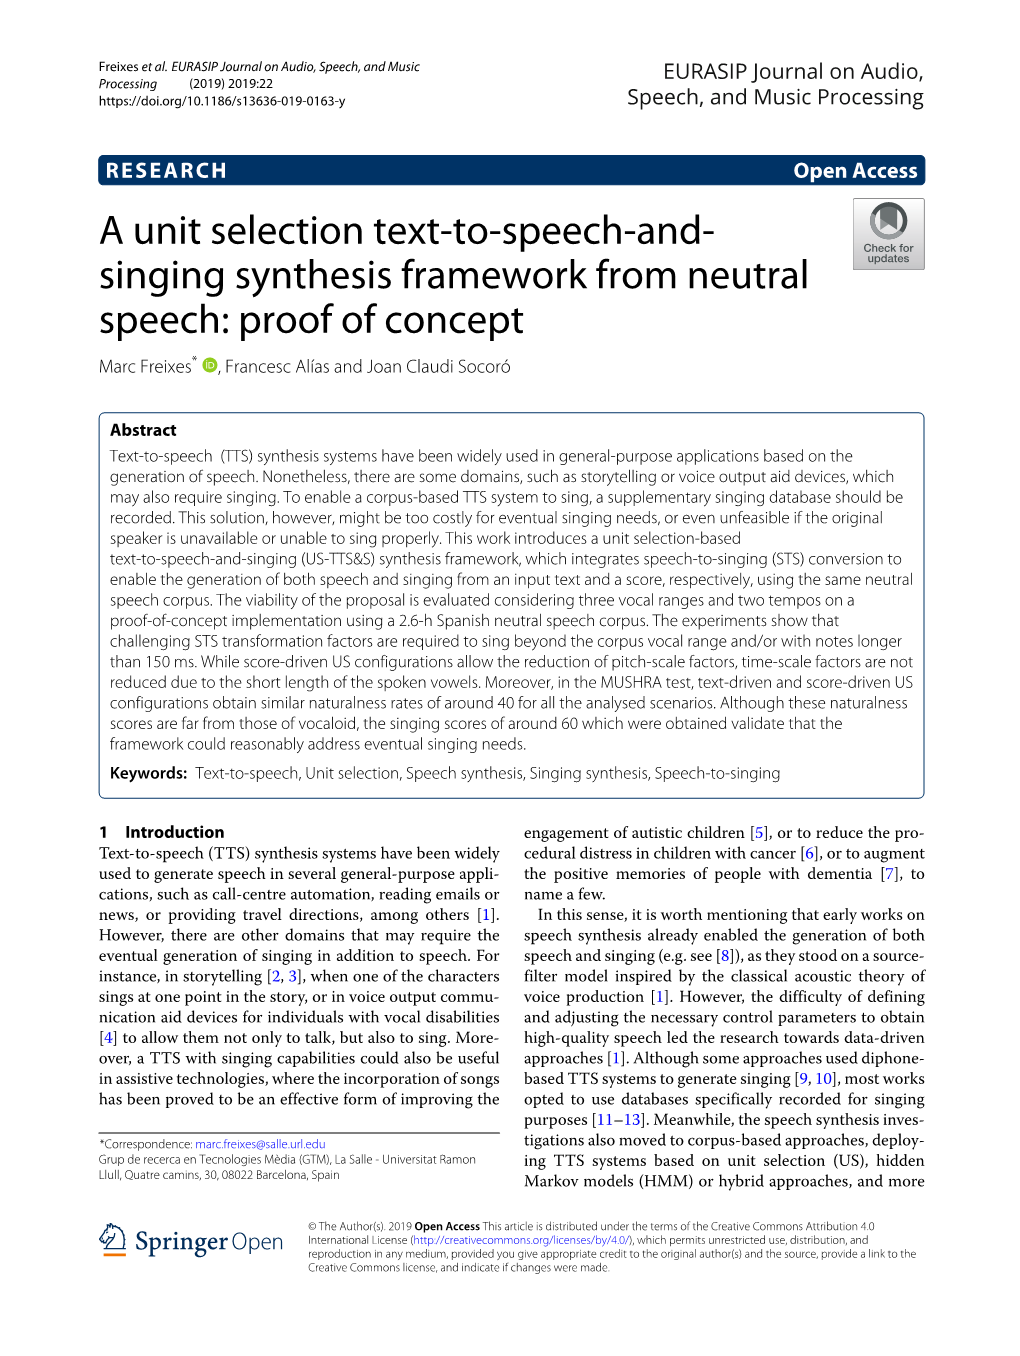 Singing Synthesis Framework from Neutral Speech: Proof of Concept Marc Freixes* , Francesc Alías and Joan Claudi Socoró